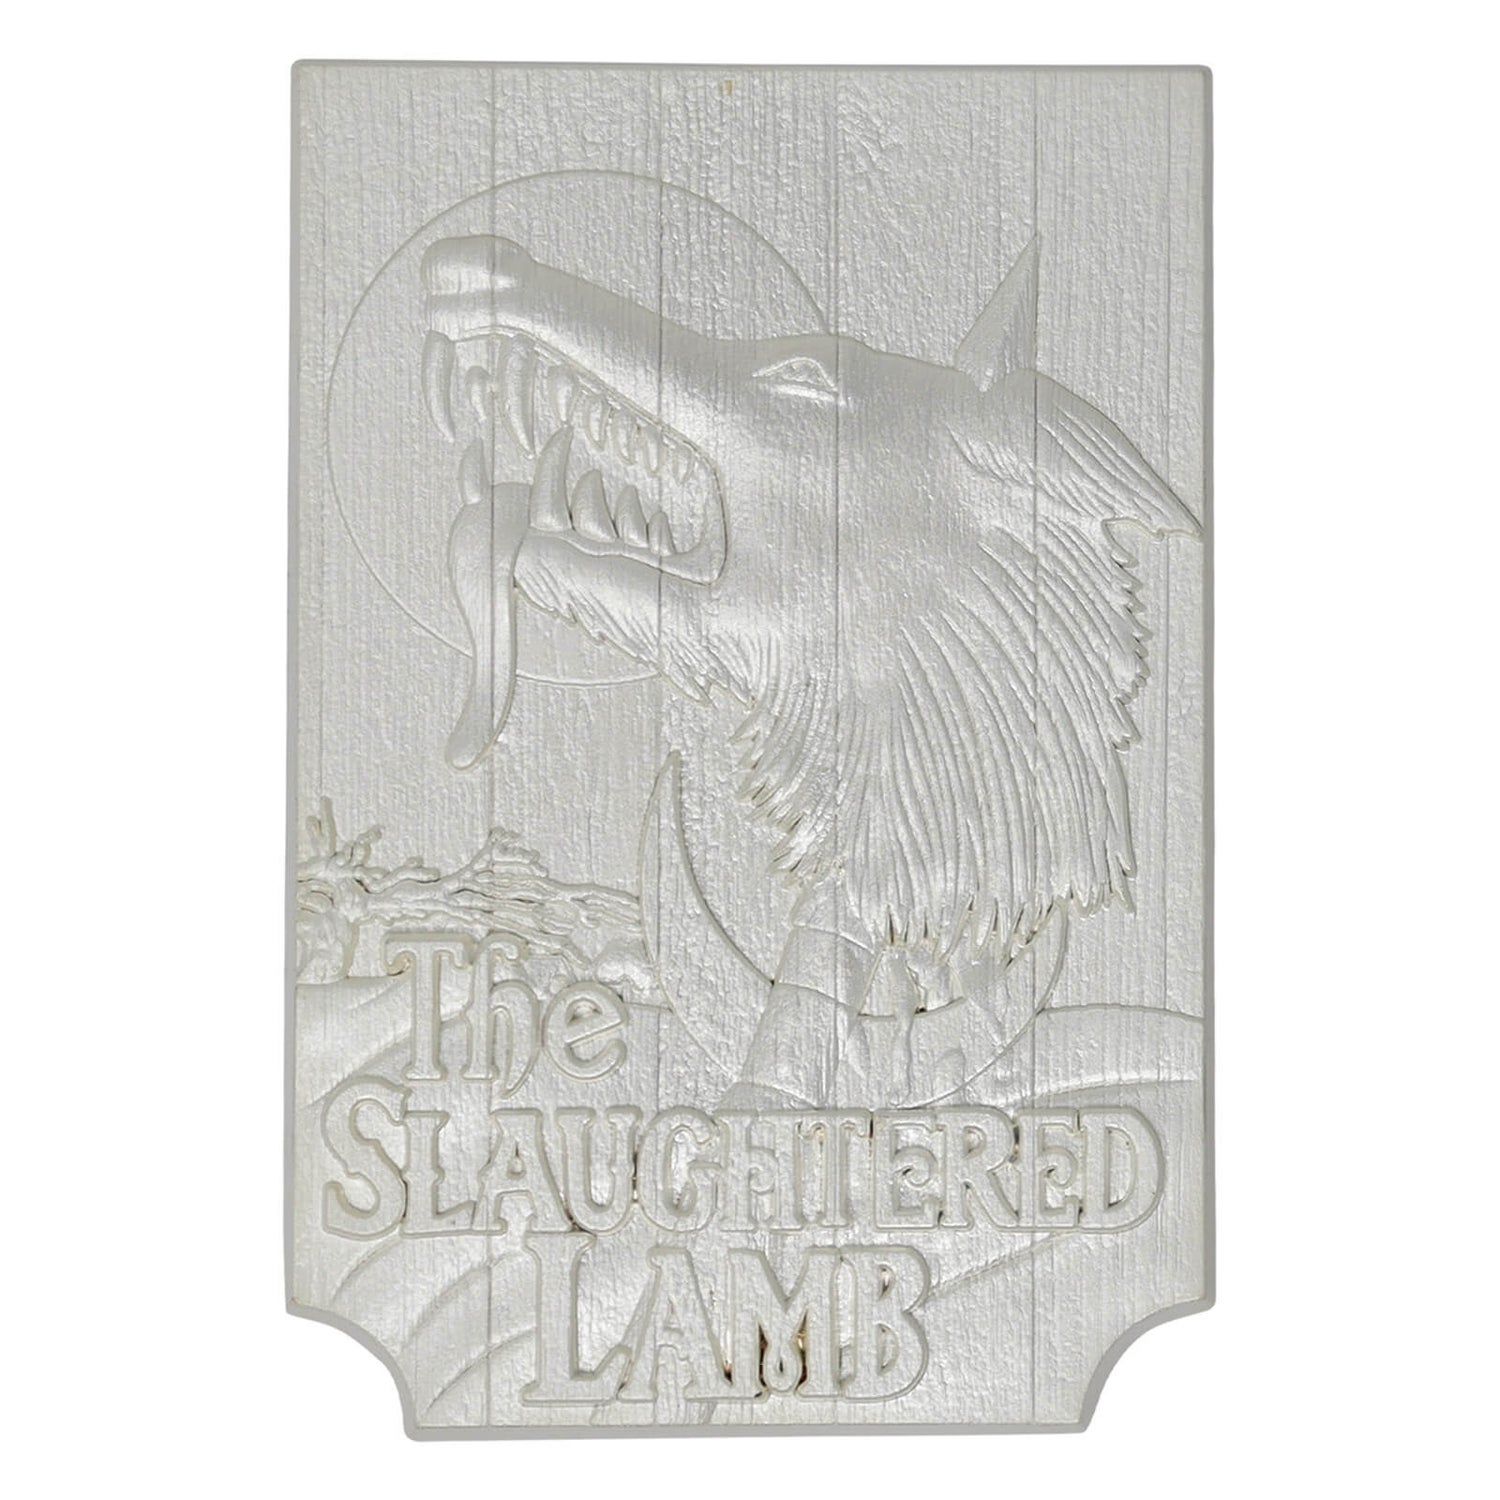 Fanattik American Werewolf in London Limited Edition Silver Plated Replica